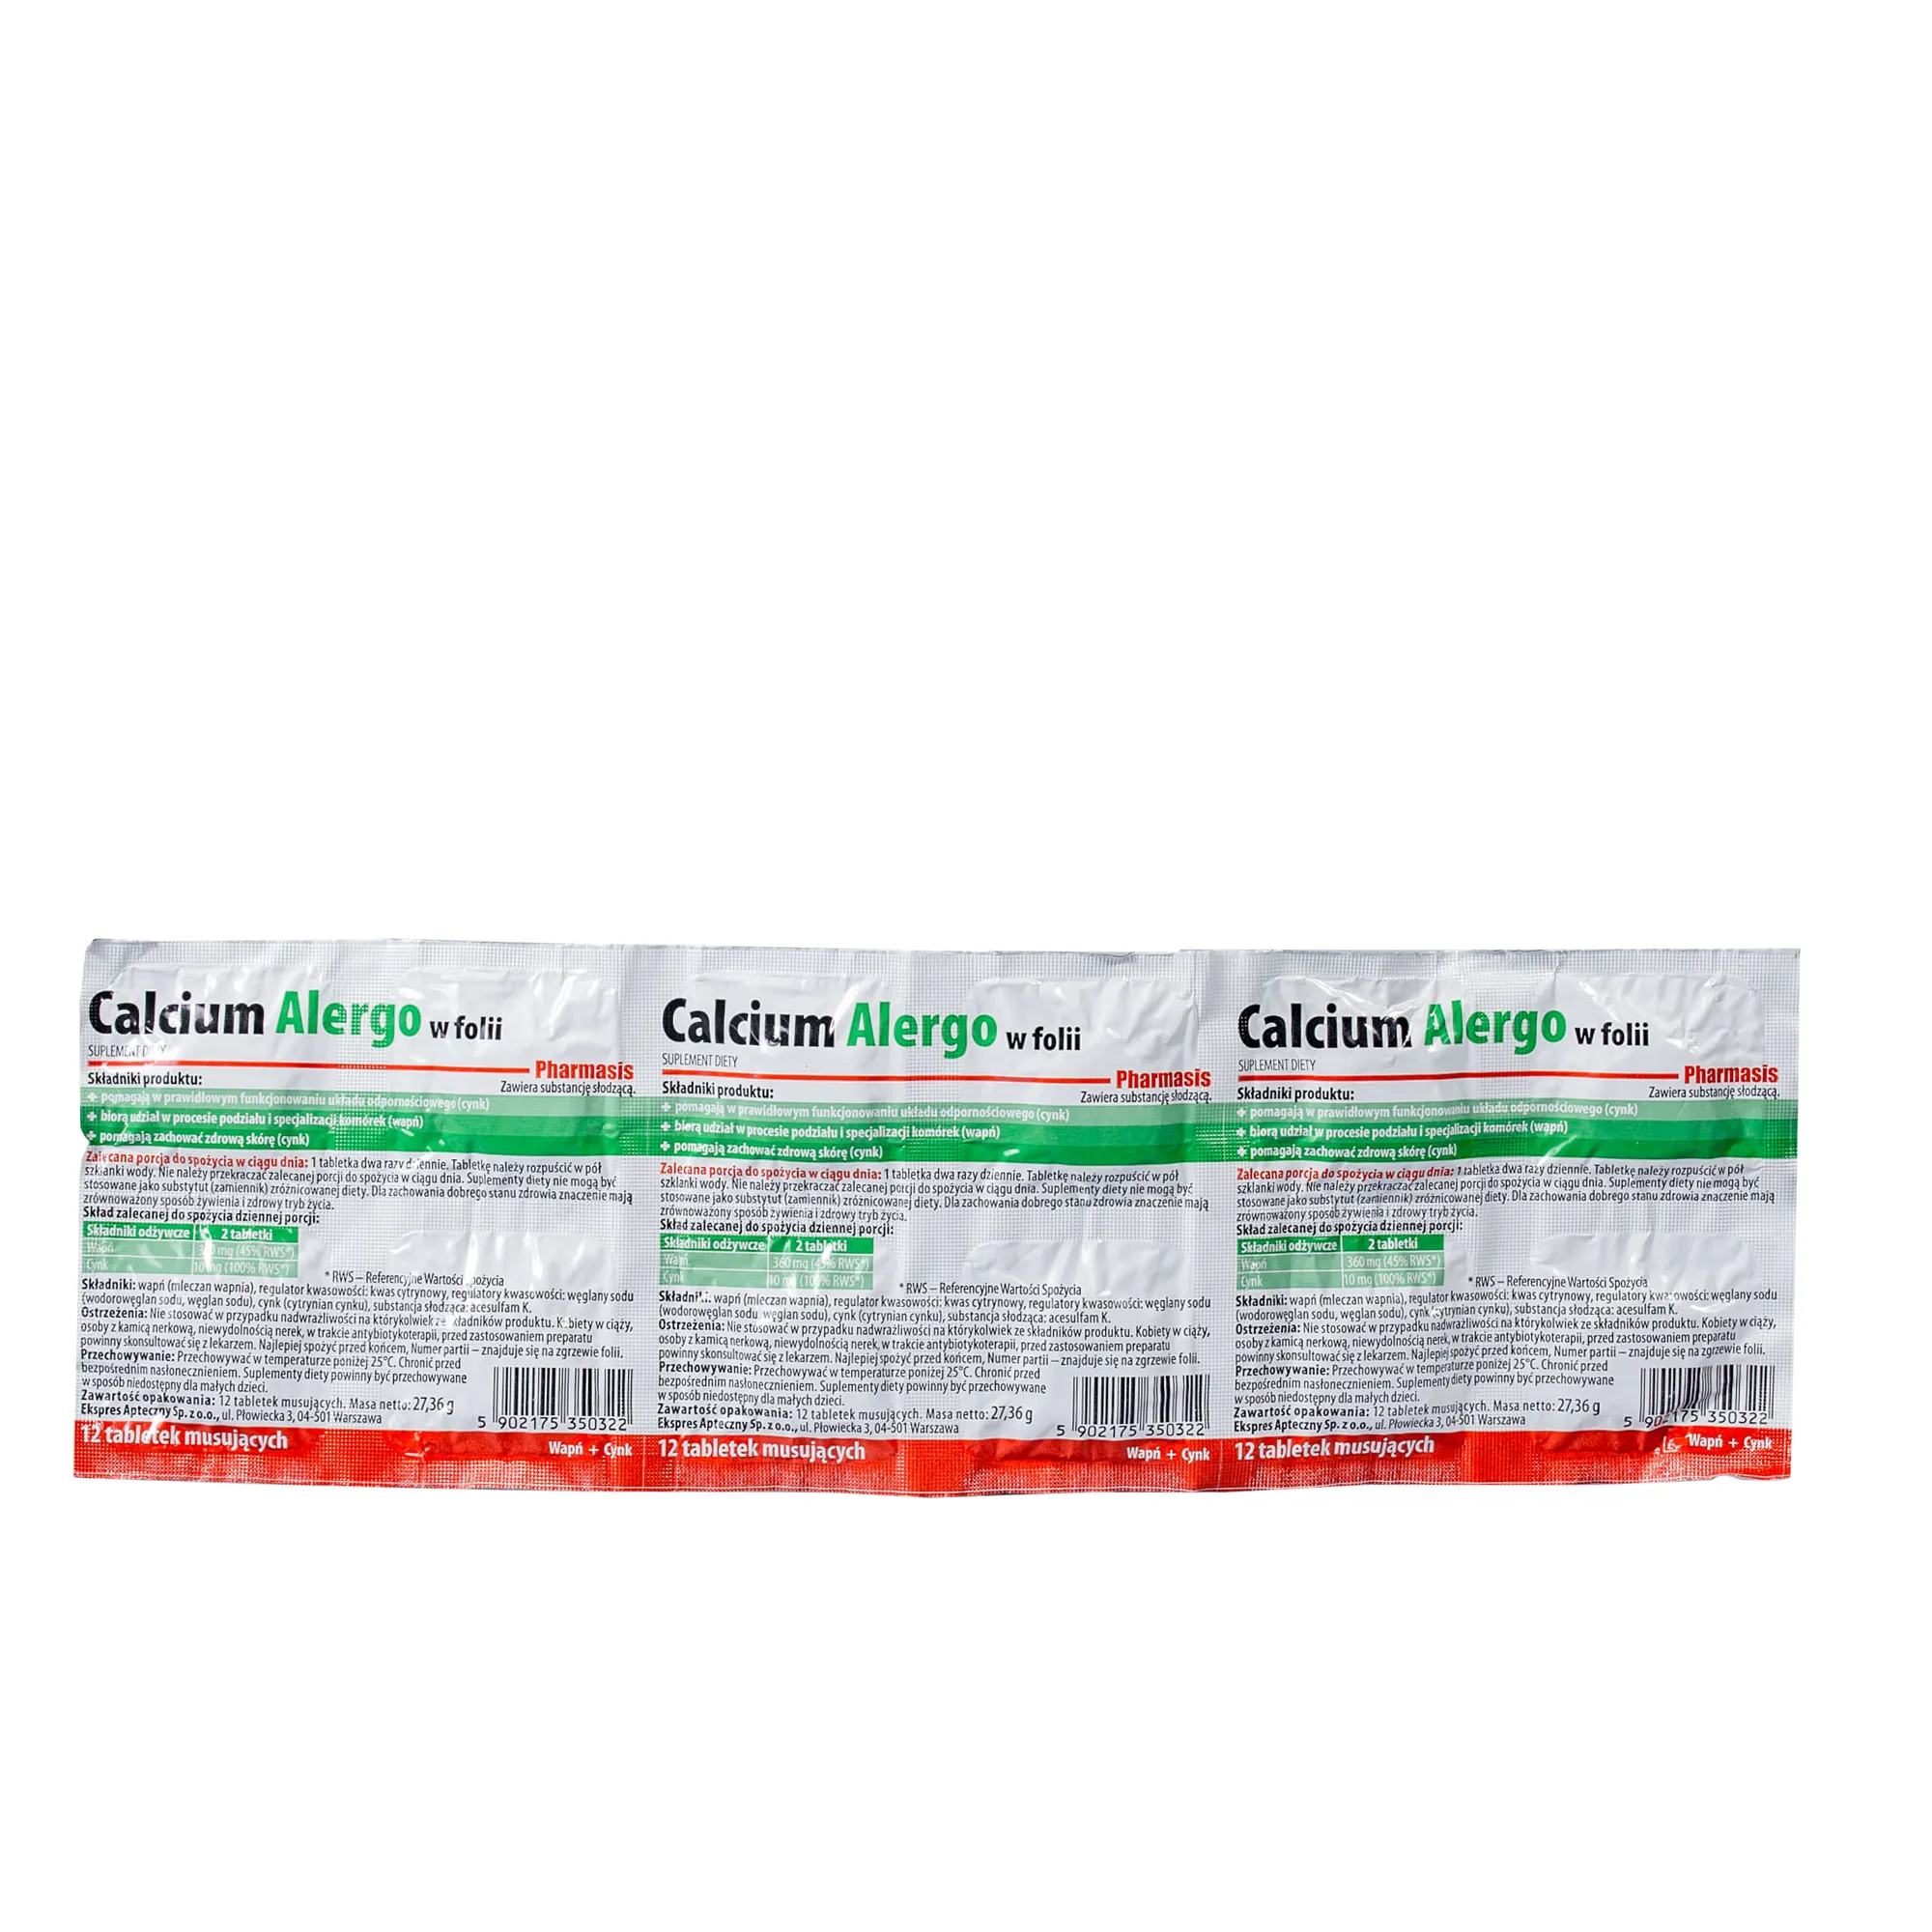 Calcium Alergo w folii, suplement diety, 12 tabletek musujących